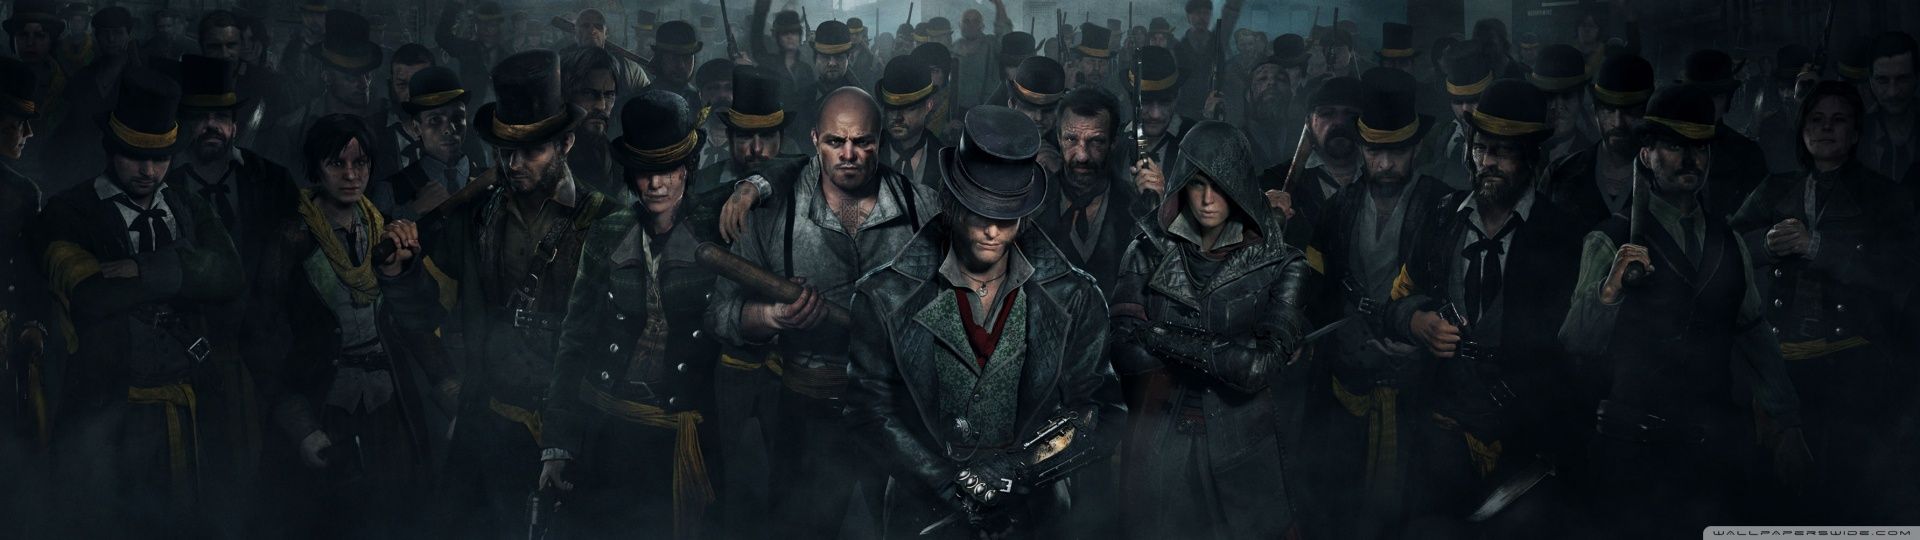 Assassins Creed Syndicate Gang 2015 video game HD desktop